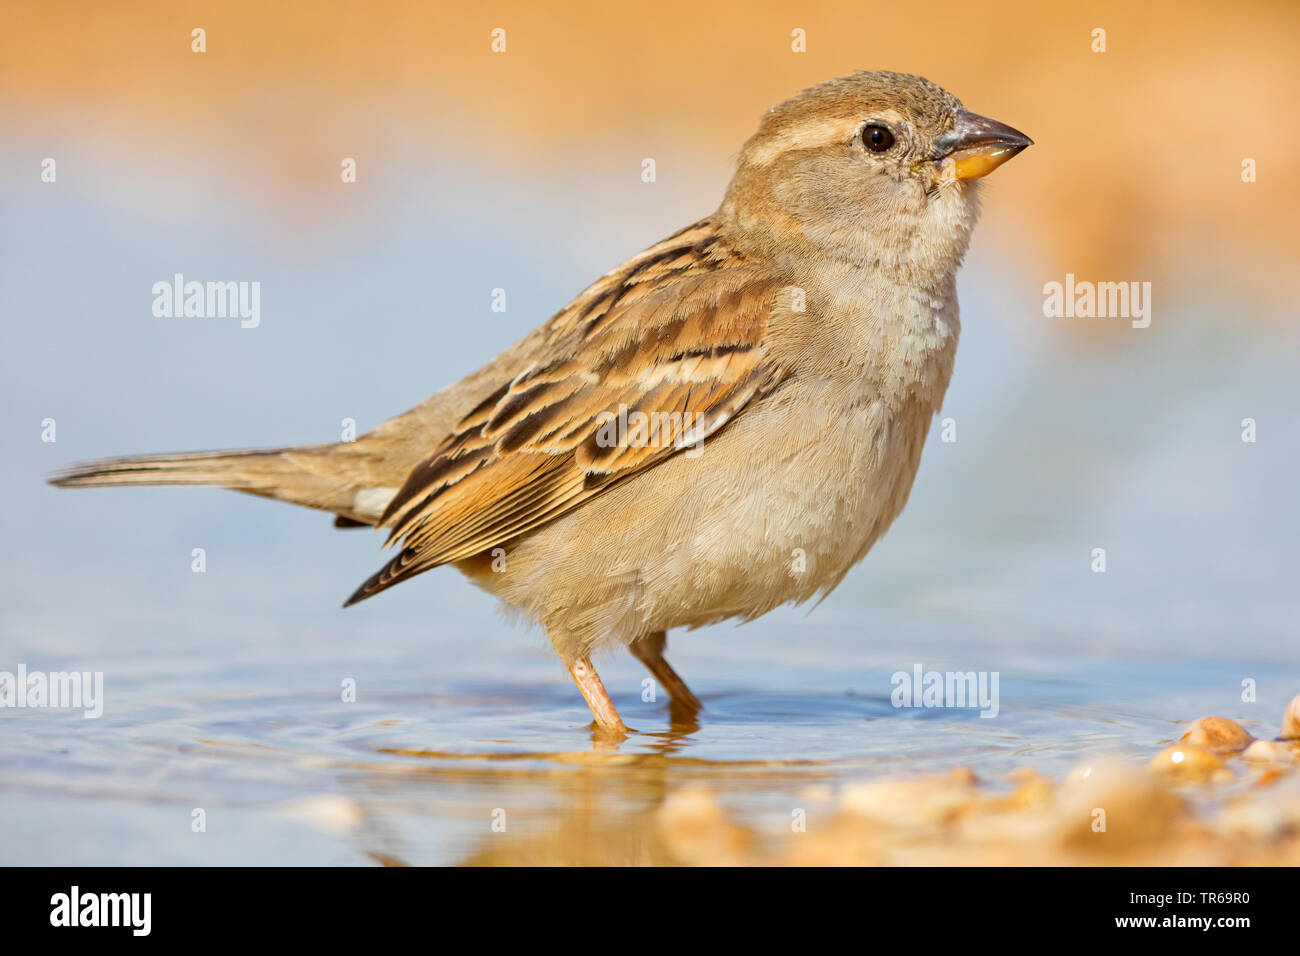 Spanish sparrow (Passer hispaniolensis), standing in water, drinking, Israel Stock Photo